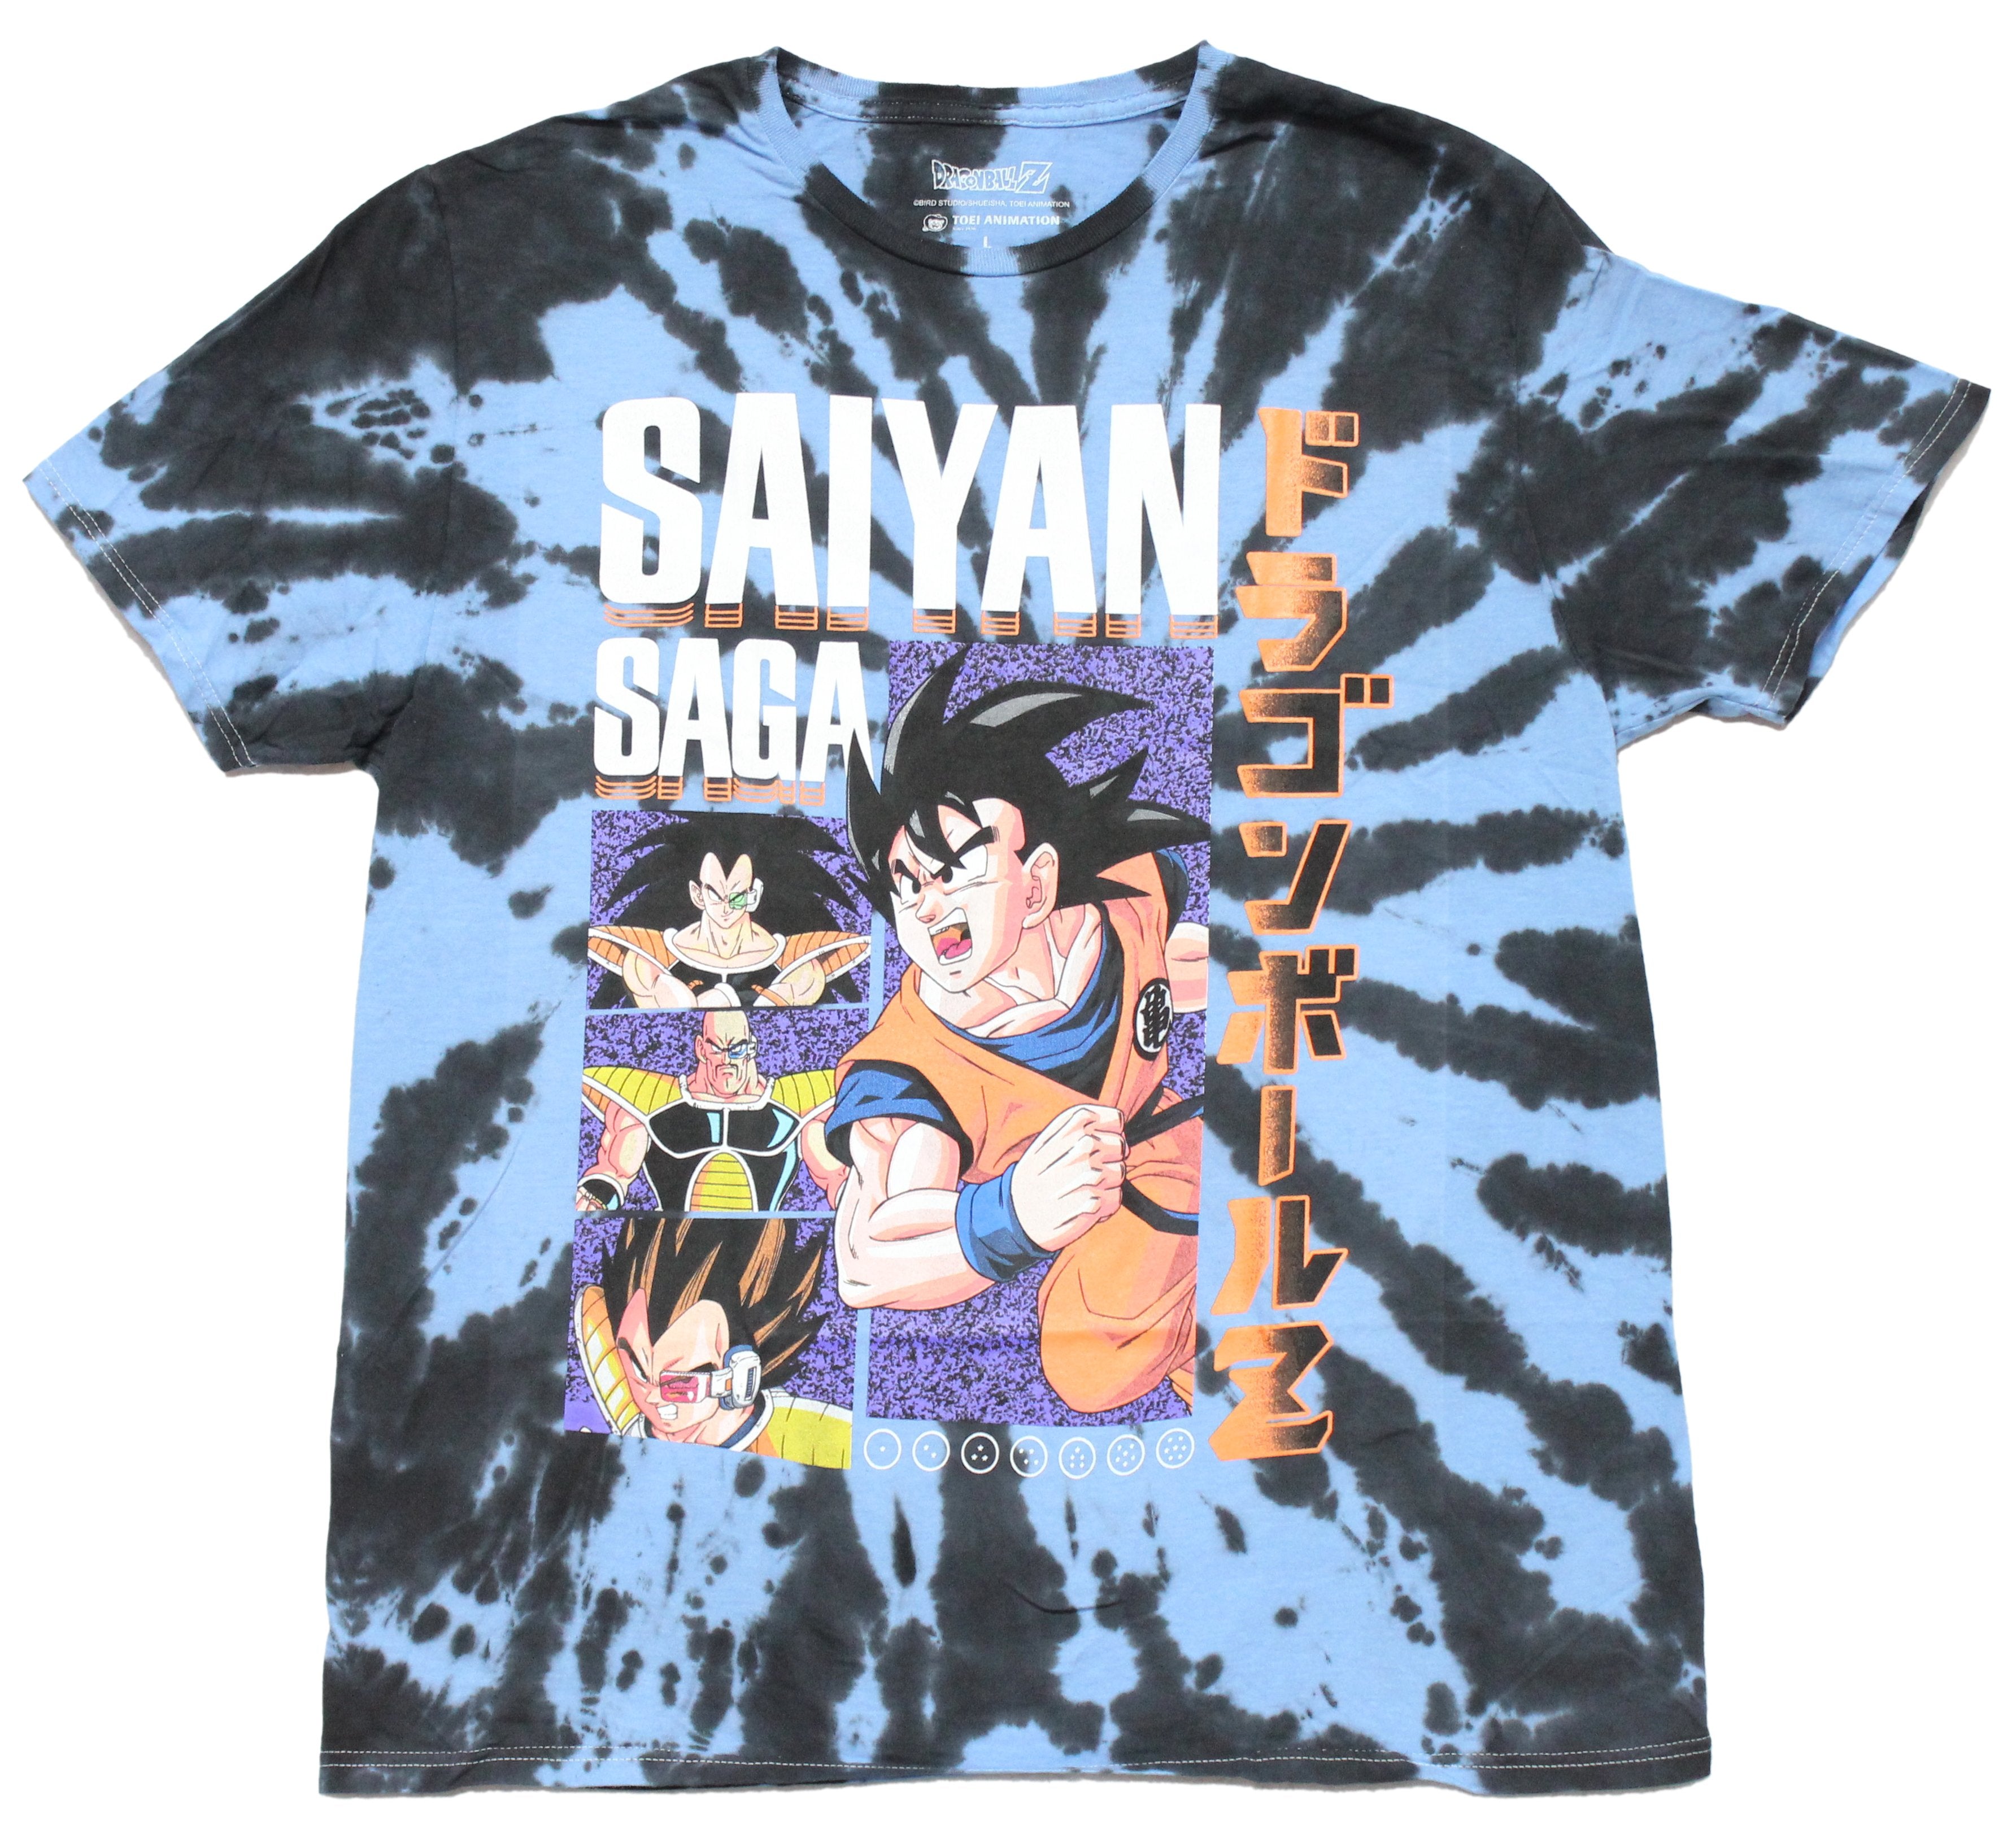 Dragonball Z Mens T-Shirt -Saiyan Saga 3 Panel Tie Dye